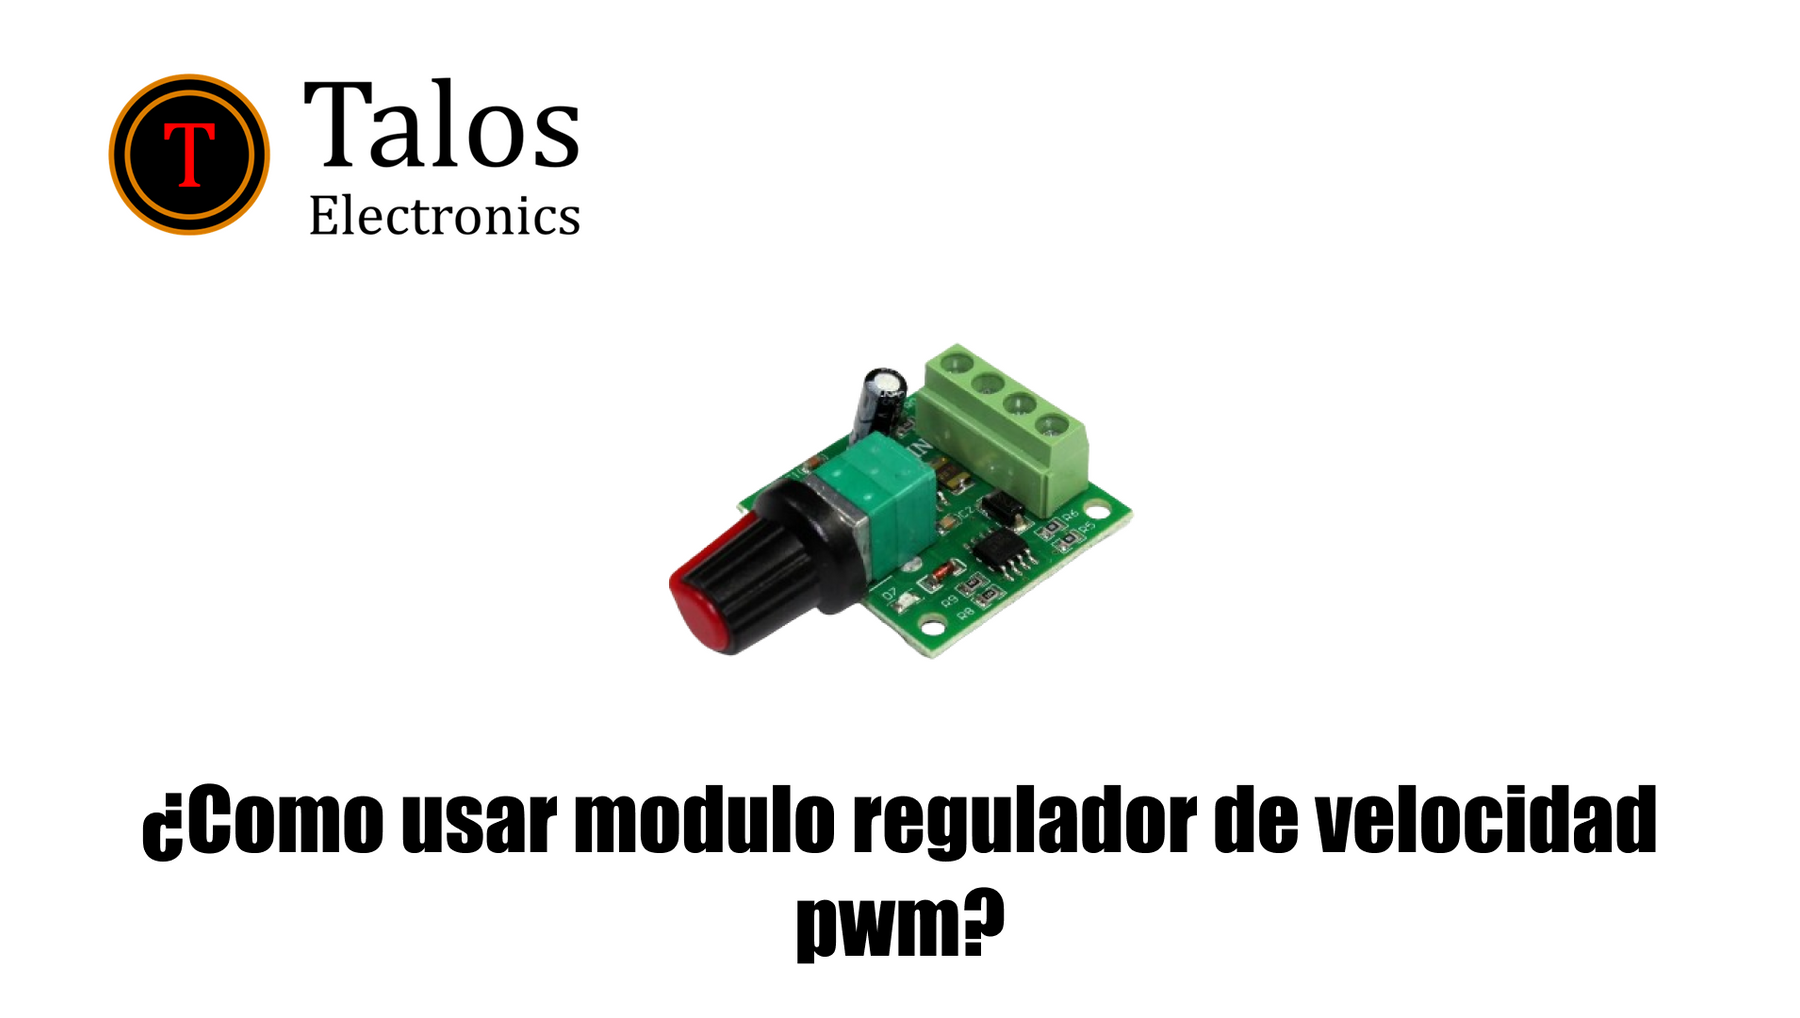 ¿Como usar modulo regulador de velocidad pwm?